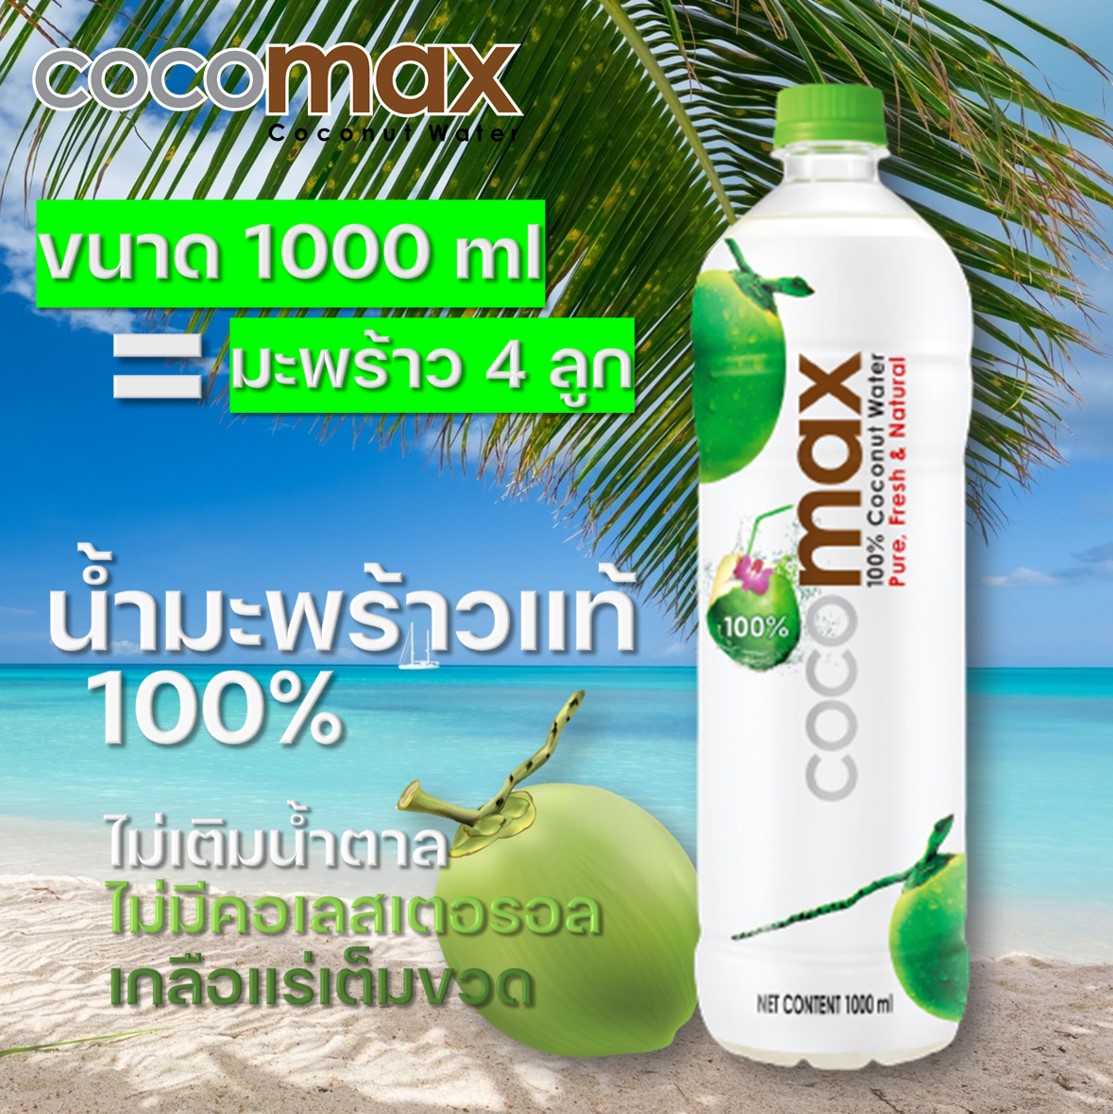 ?Gems Fruity?[ขวด1ลิตร] Cocomax โคโค่แม็ก น้ำมะพร้าว 10000 ml. แบบขวด น้ำมะพร้าวสด น้ำมะพร้าวแท้ ไม่เติมน้ำตาล